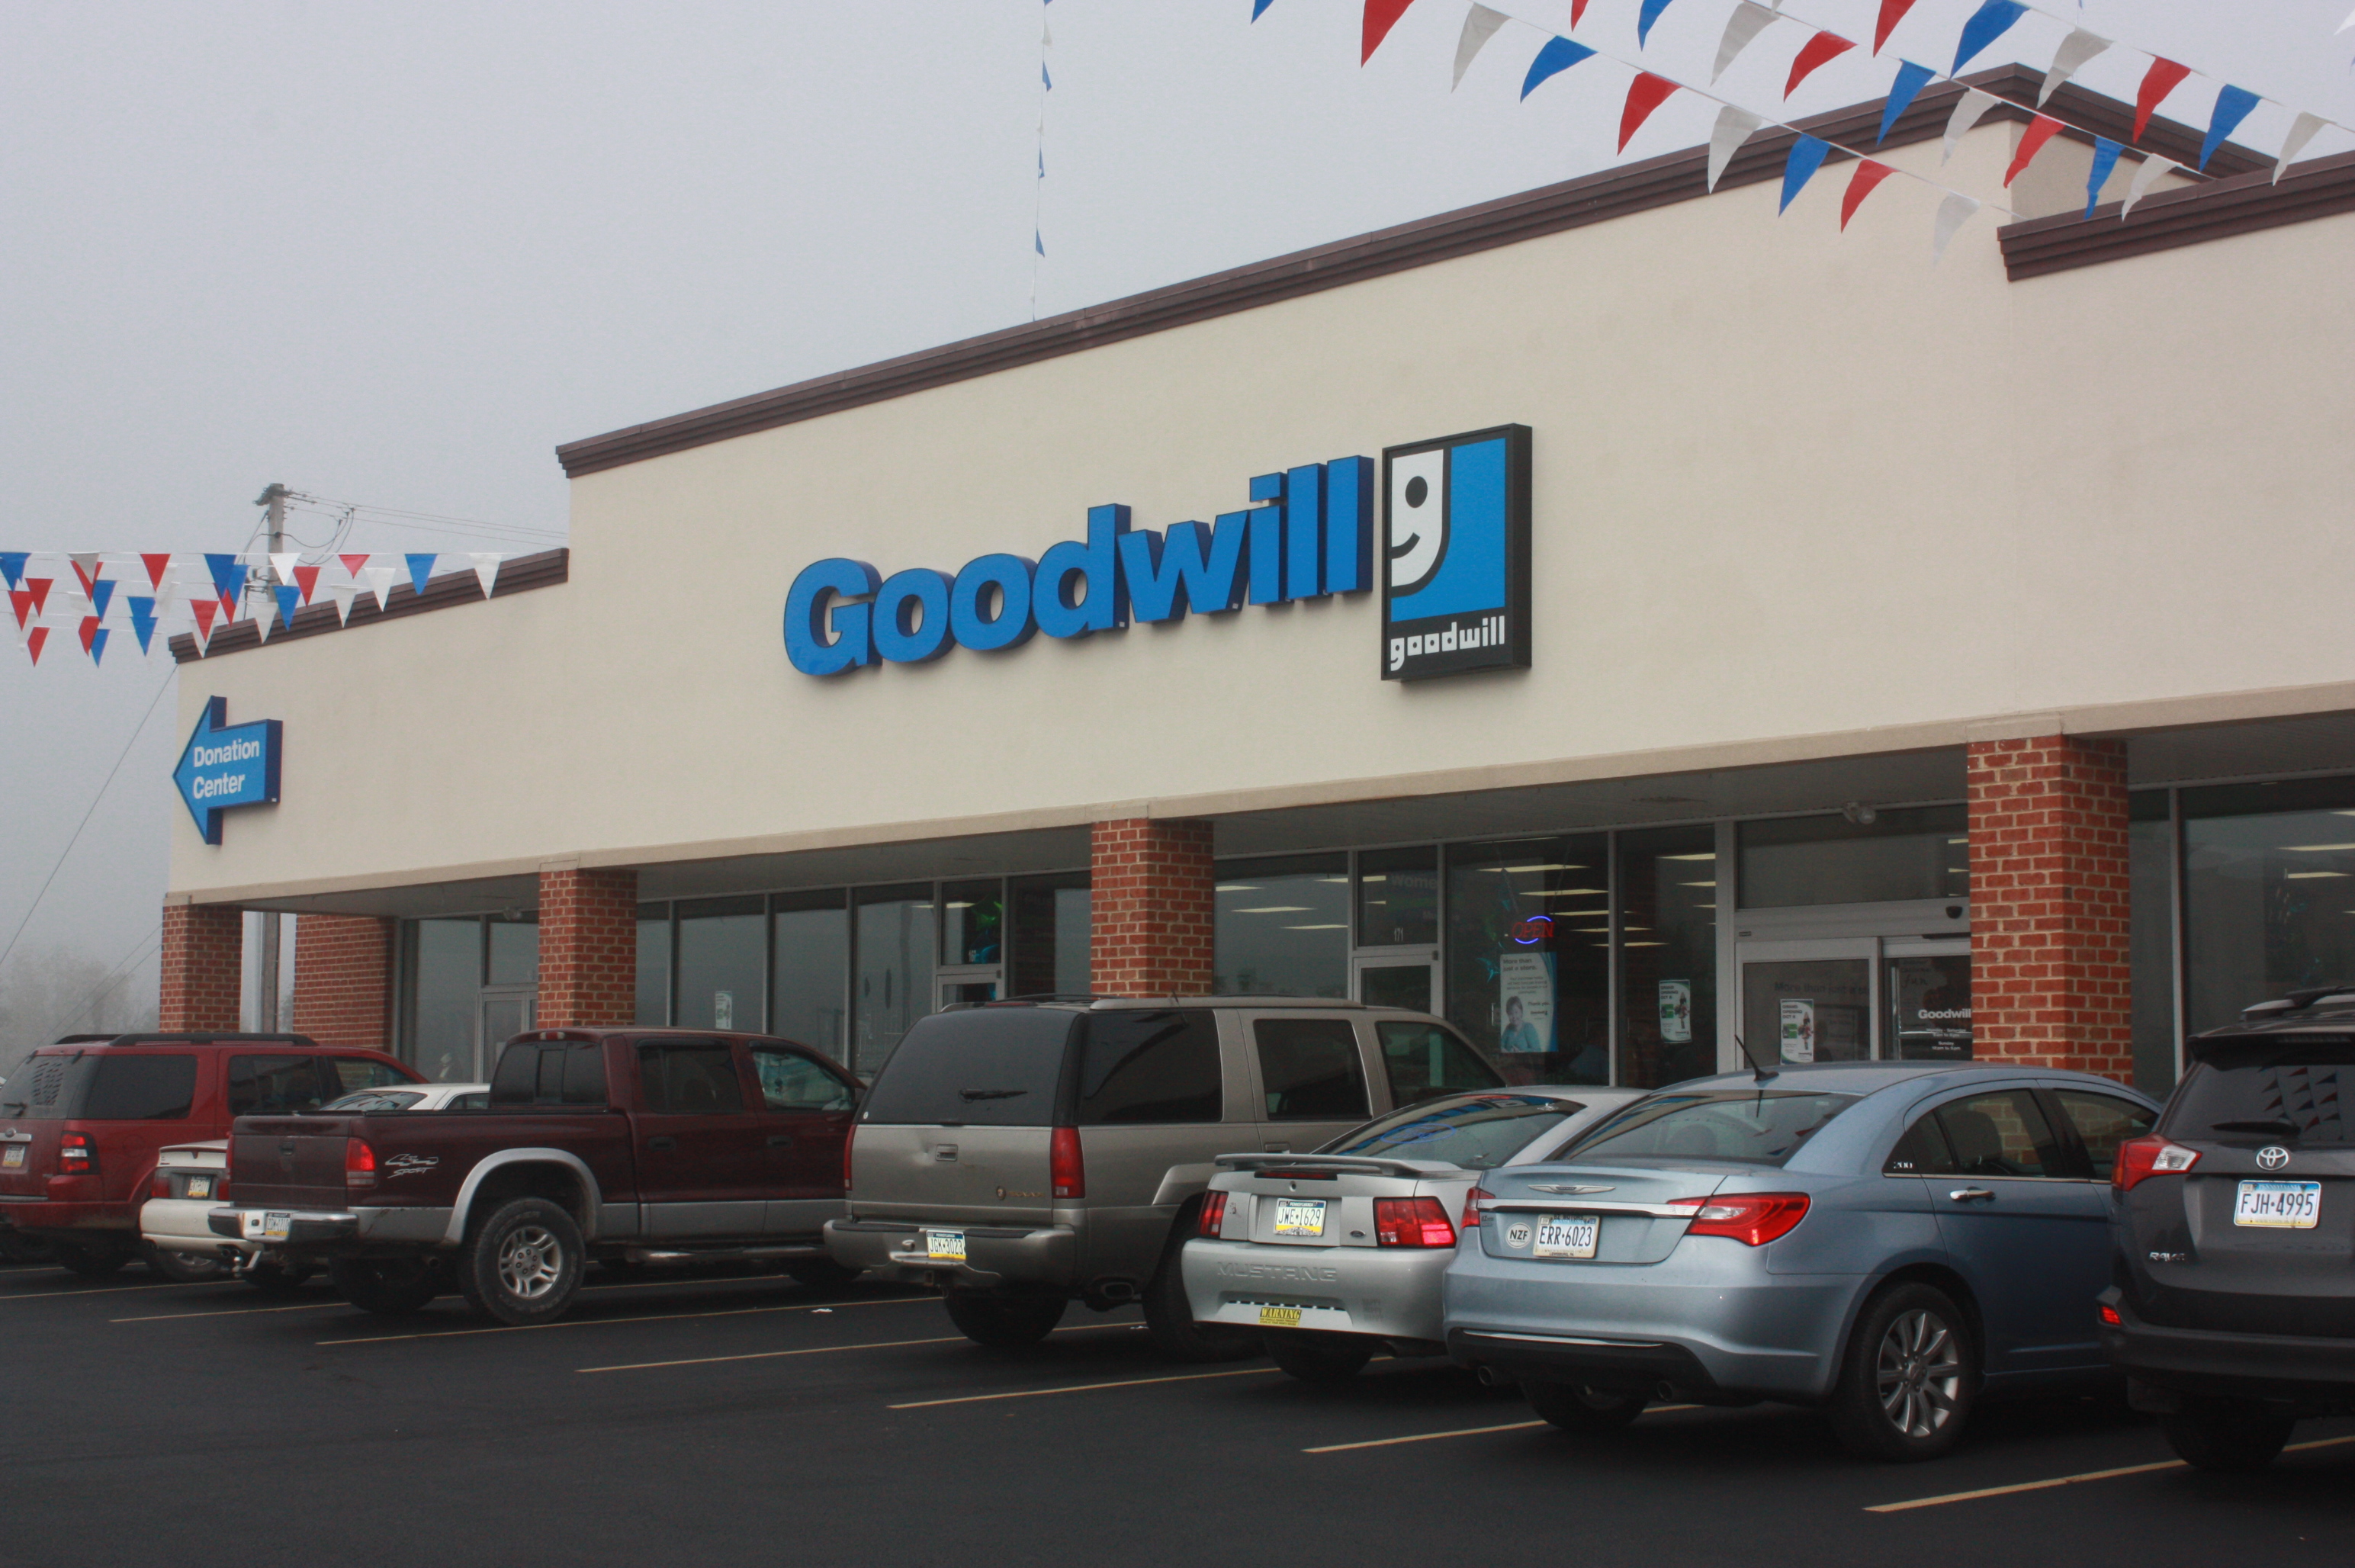 Goodwill Store & Donation Center